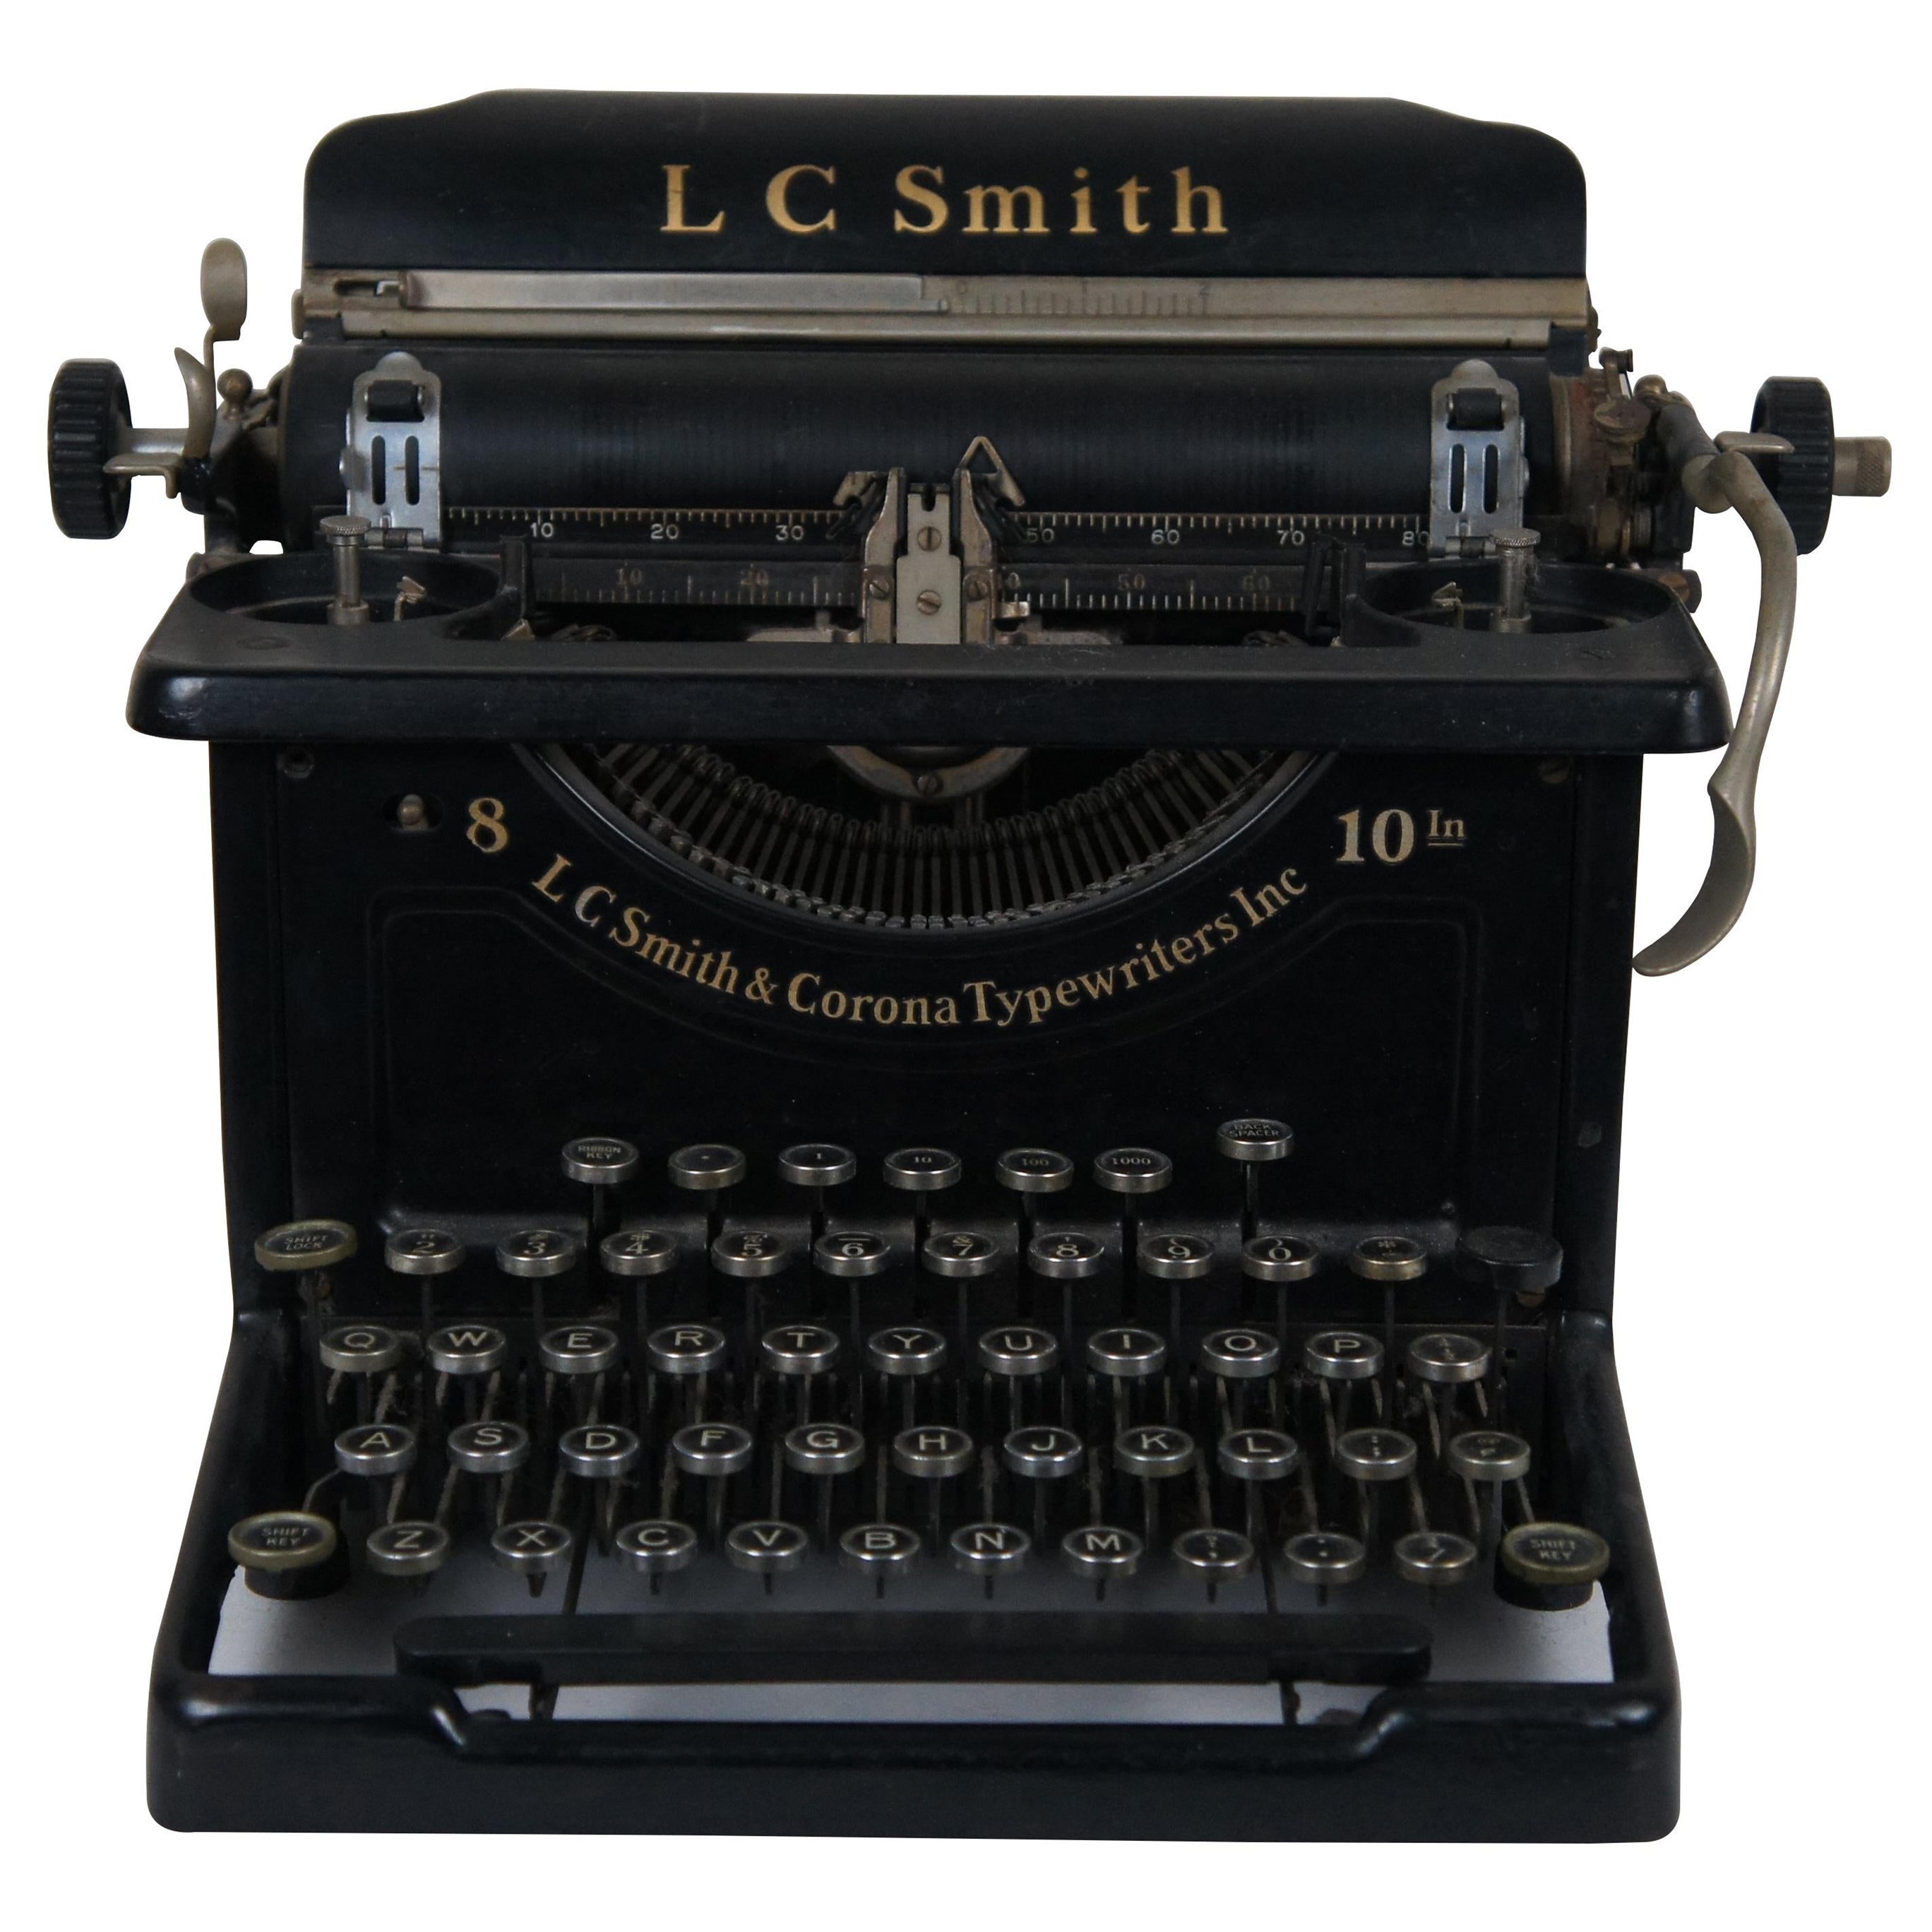 When was the typewriter invented?